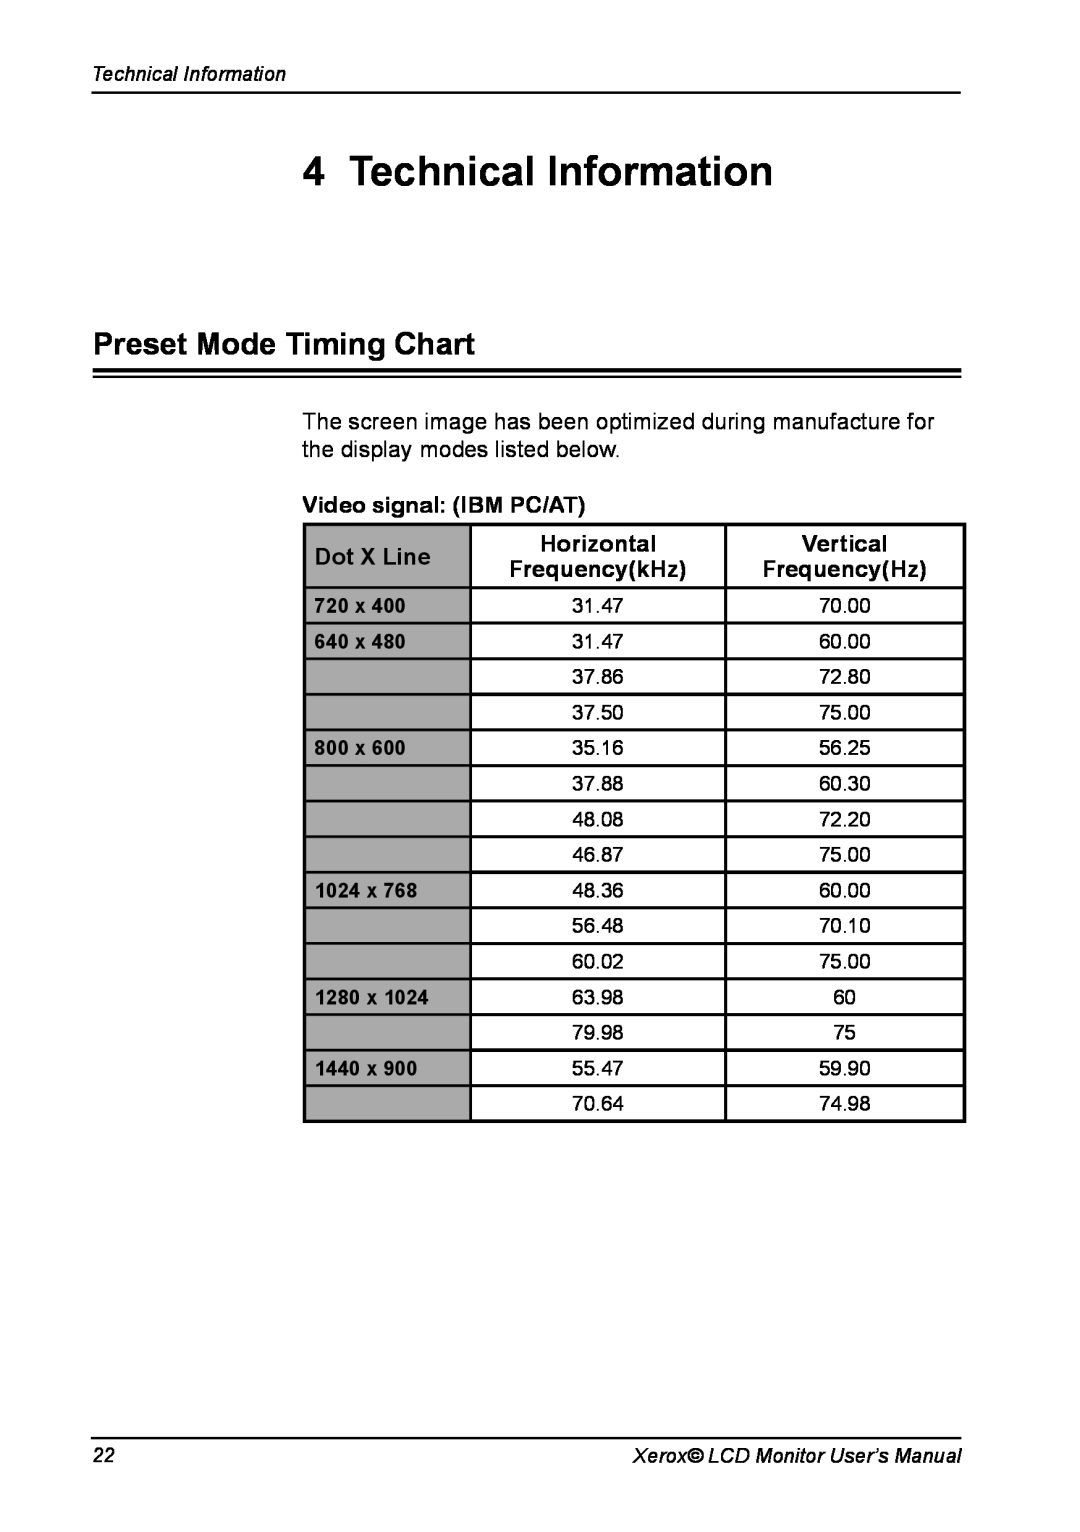 Xerox XR6 Series manual Technical Information, Preset Mode Timing Chart, Video signal: IBM PC/AT, Dot X Line, Horizontal 